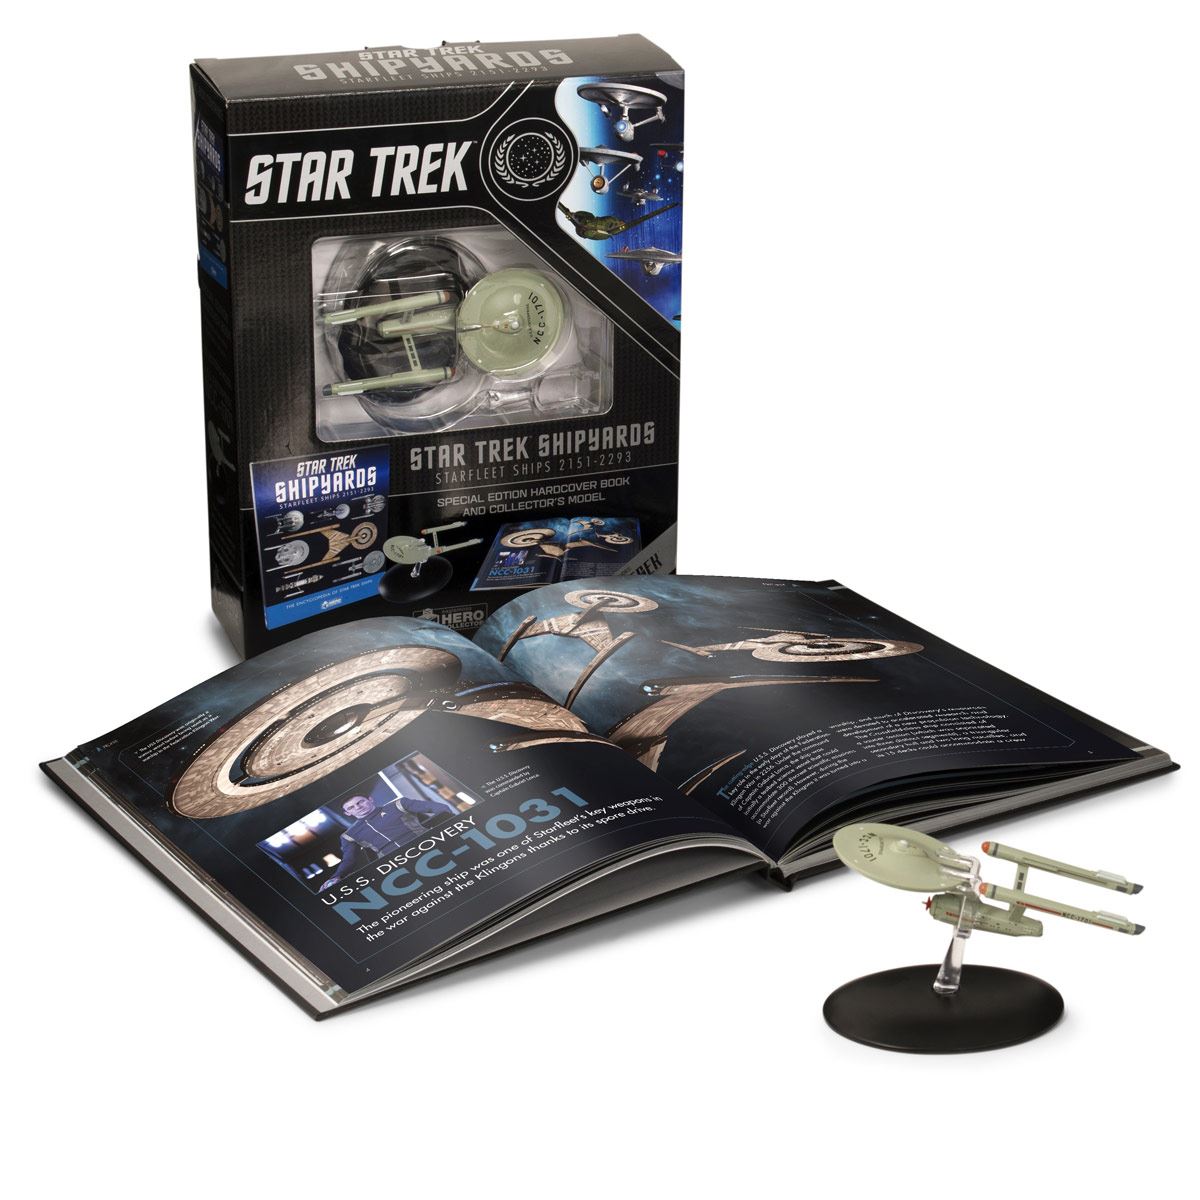 Star Trek Shipyards Star Trek